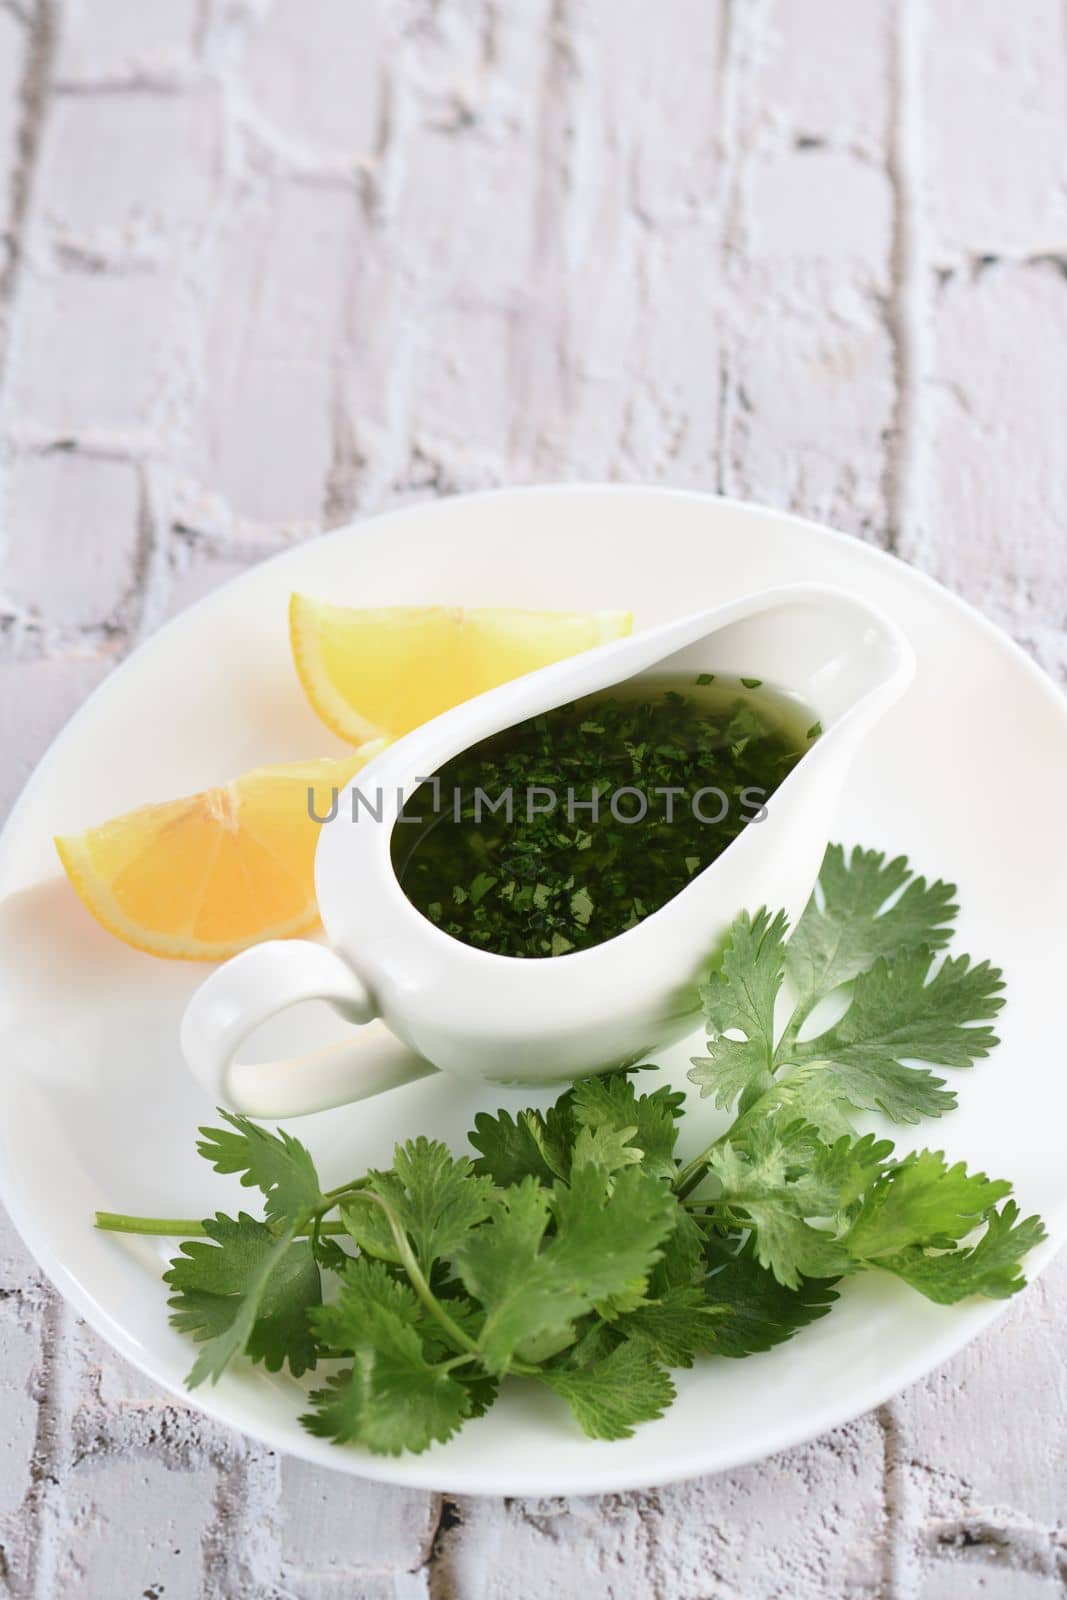 Green delicious herbal marinade of cilantro, basil, parsley, oil, traditional seasoning for salad dressing